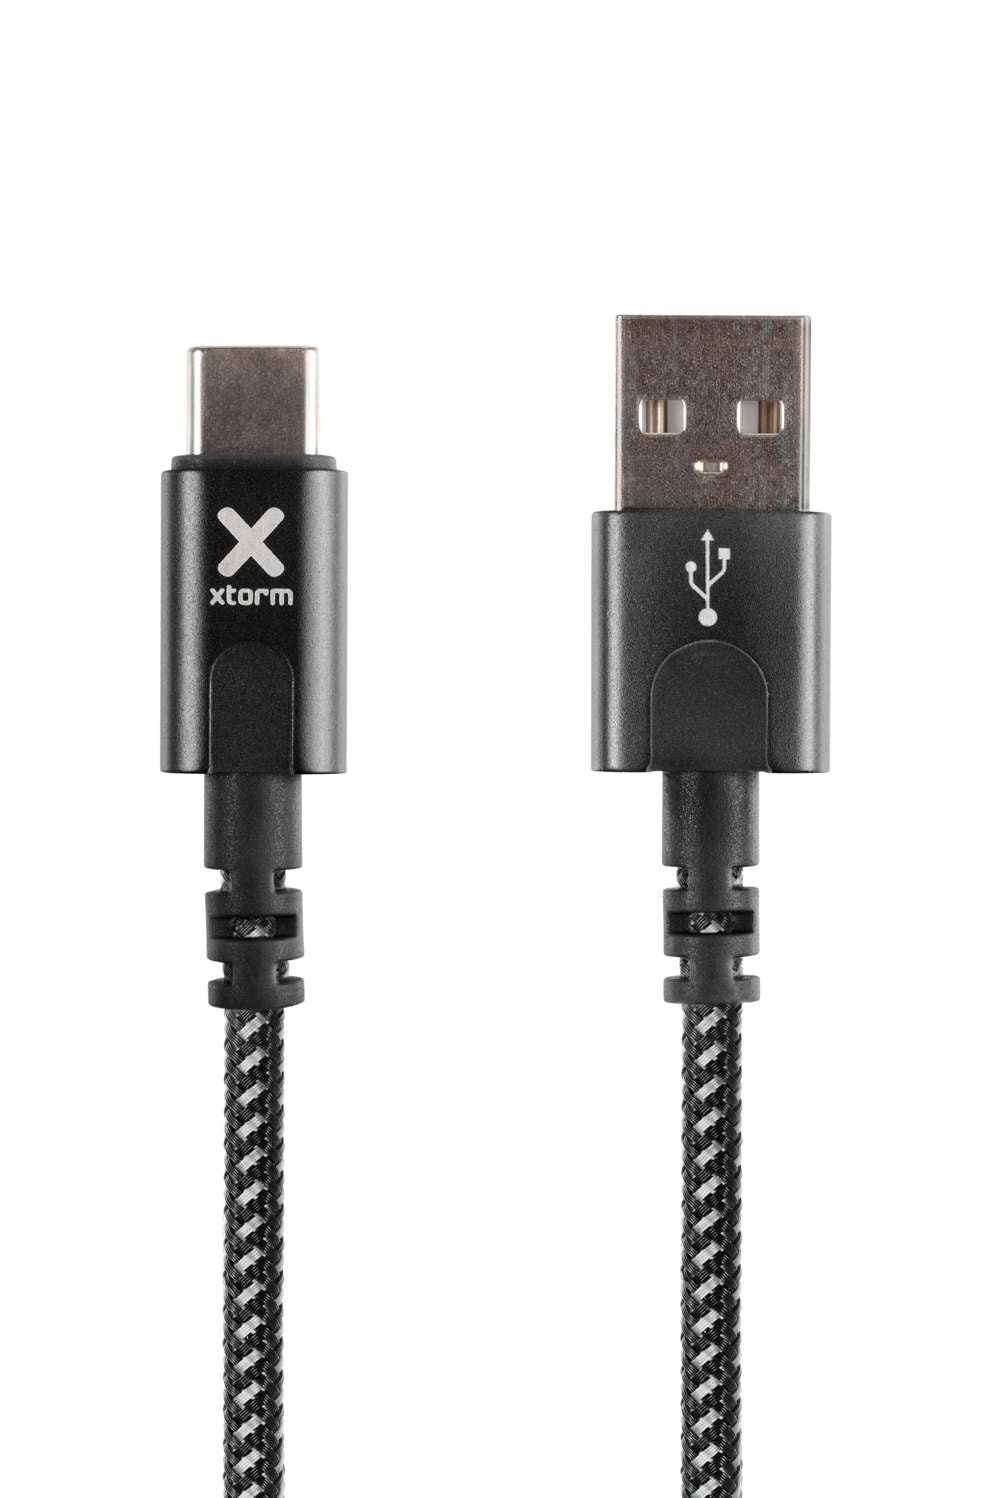 Original USB to USB-C Cable - 1 meter